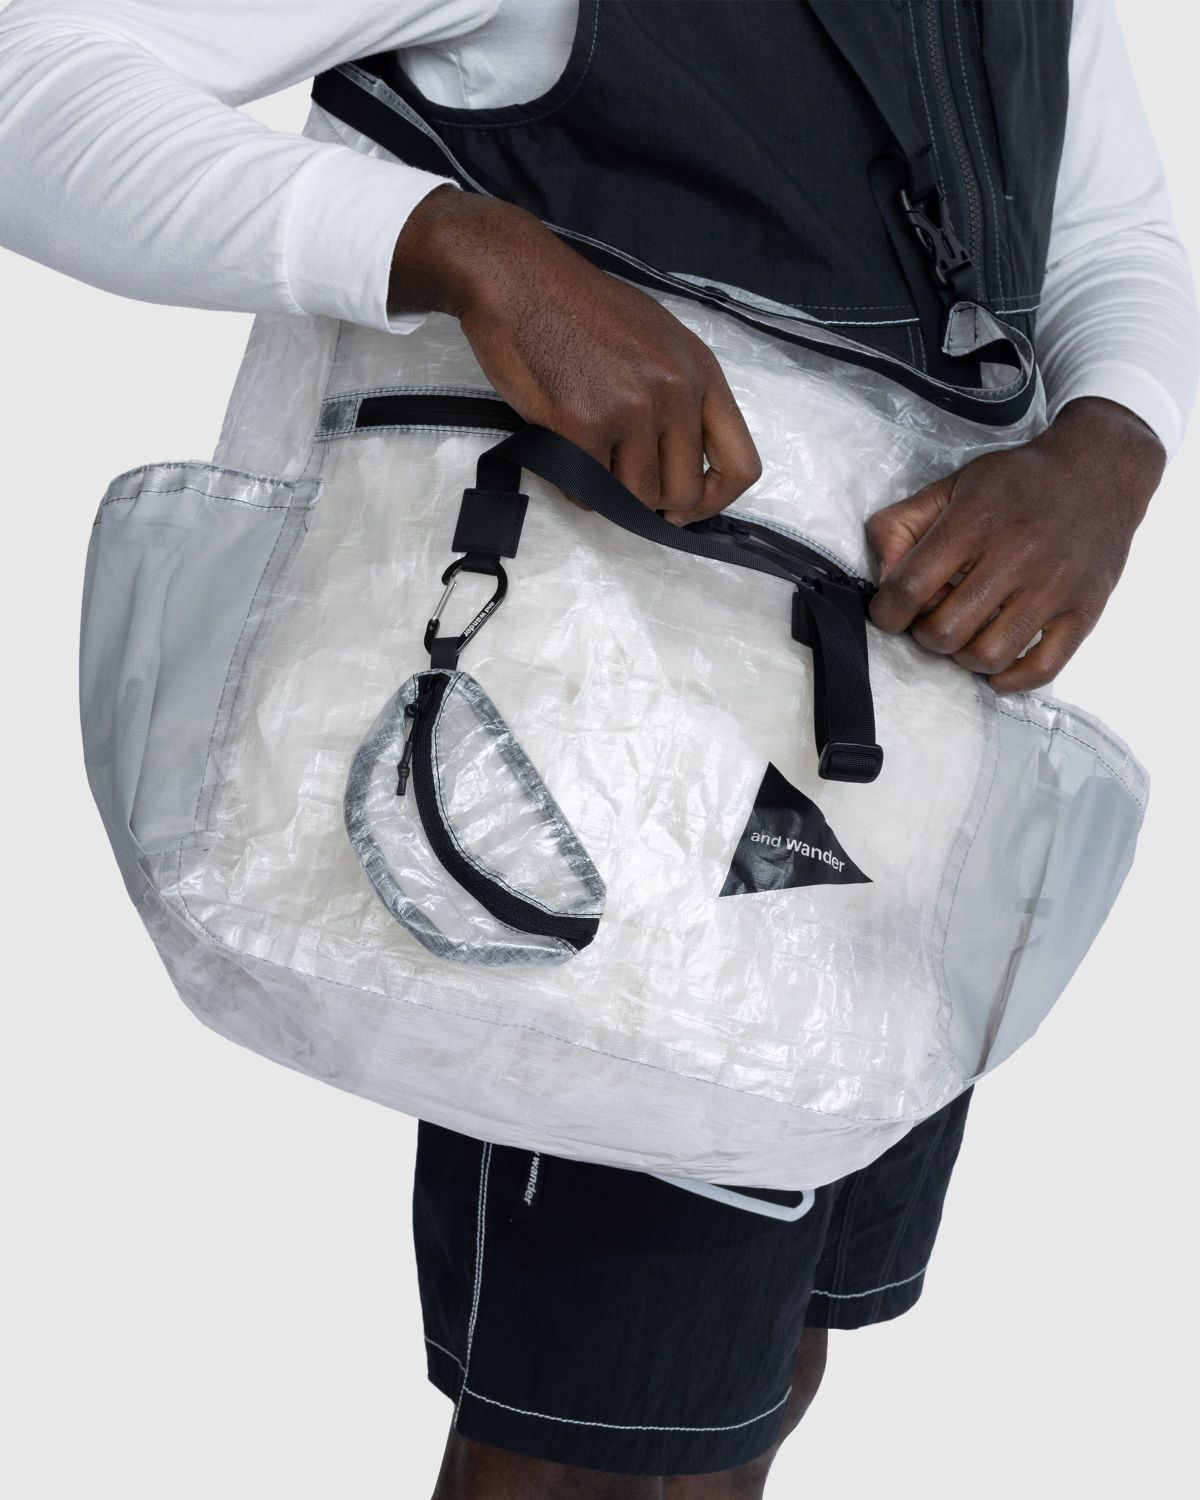 And Wander – Dyneema 3Way Tote Bag Off White